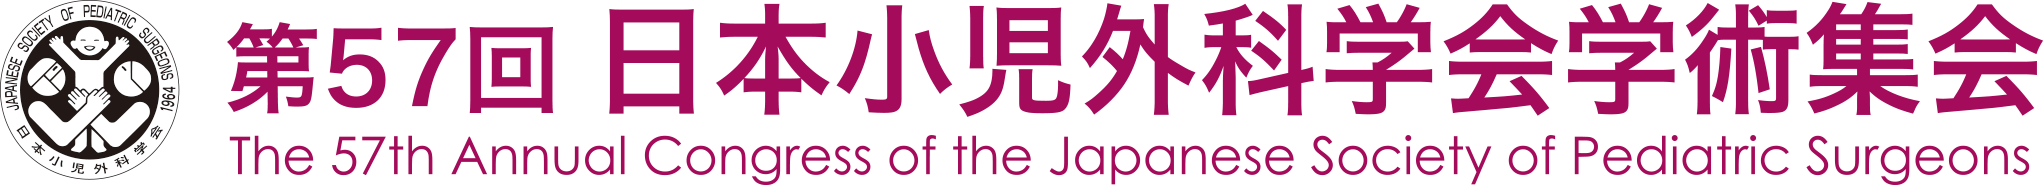 第57回 日本小児外科学会学術集会 The 57th Annual Congress of the Japanese Society of Pediatric Surgeons